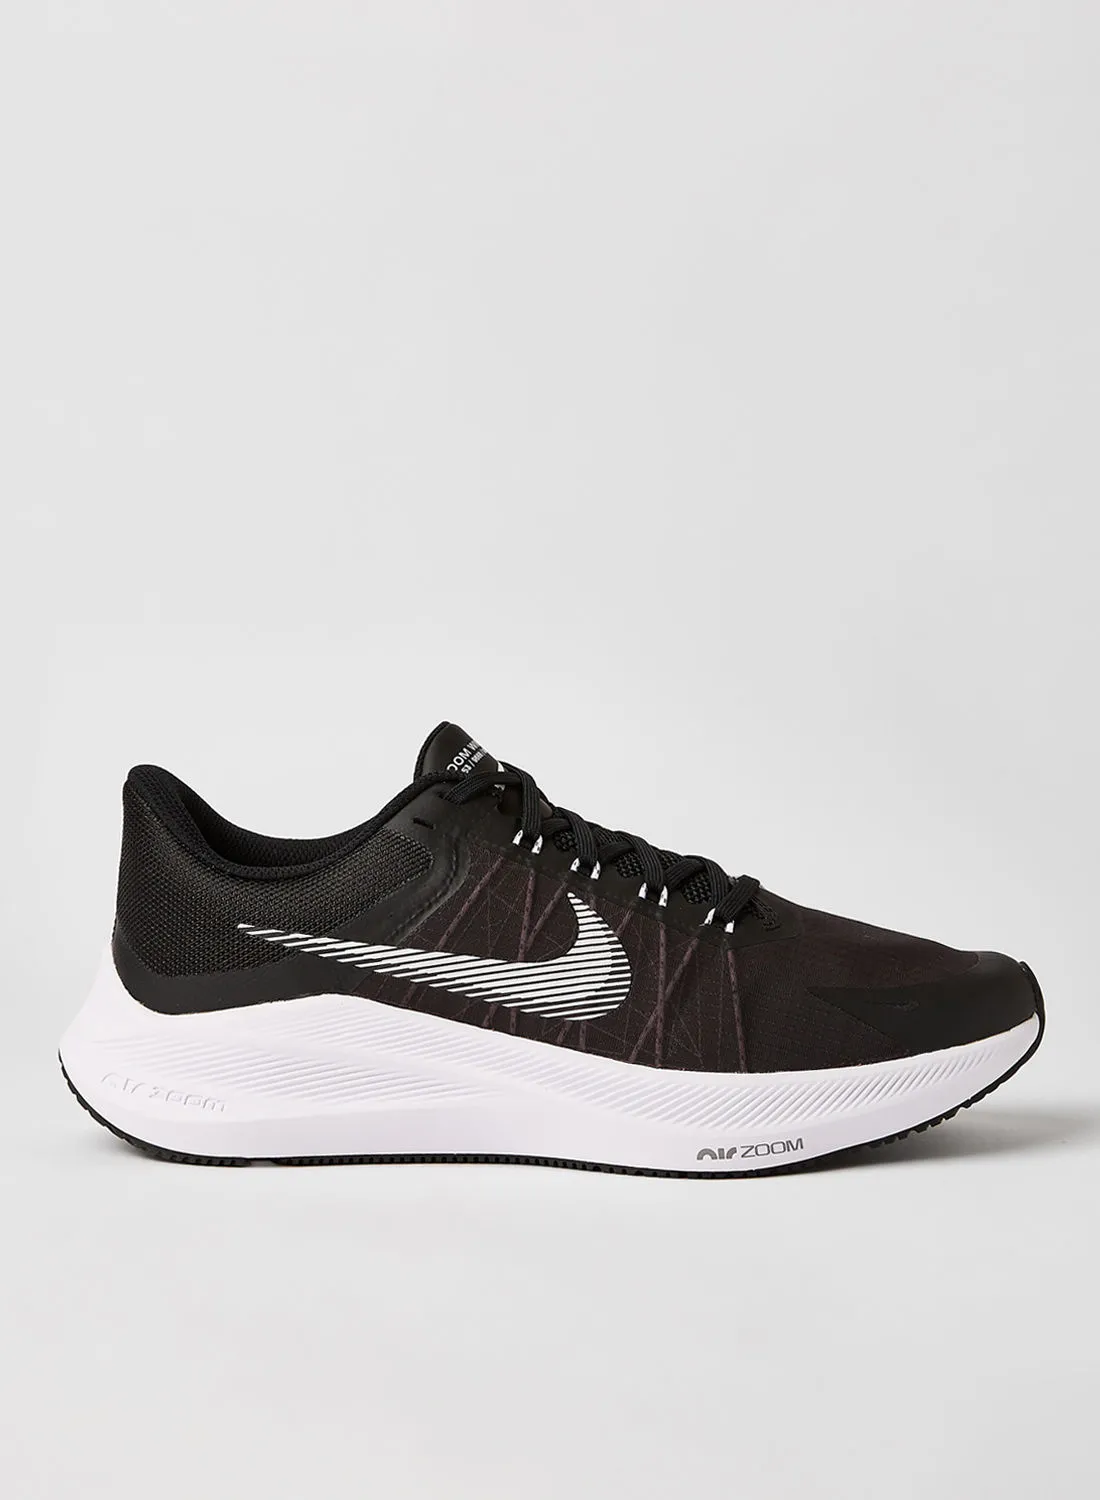 Nike Winflo 8 Running Shoes Black